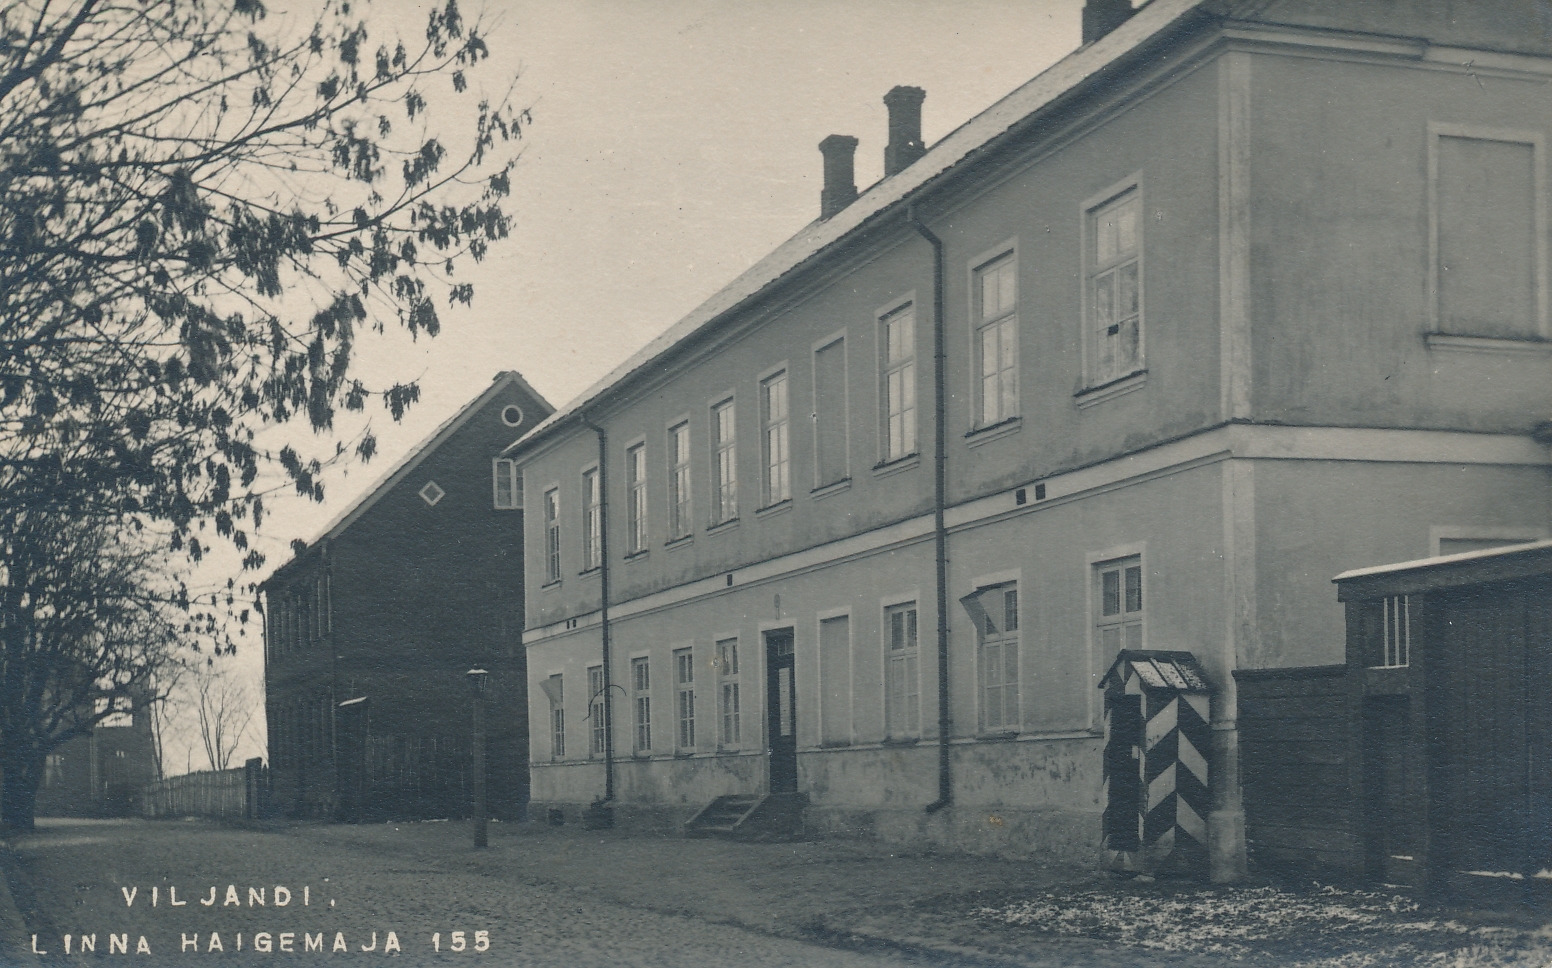 foto Viljandi, Väike tn 6, haigla (avati 1864), vahiputka (valveputka) u 1905 foto J.Riet